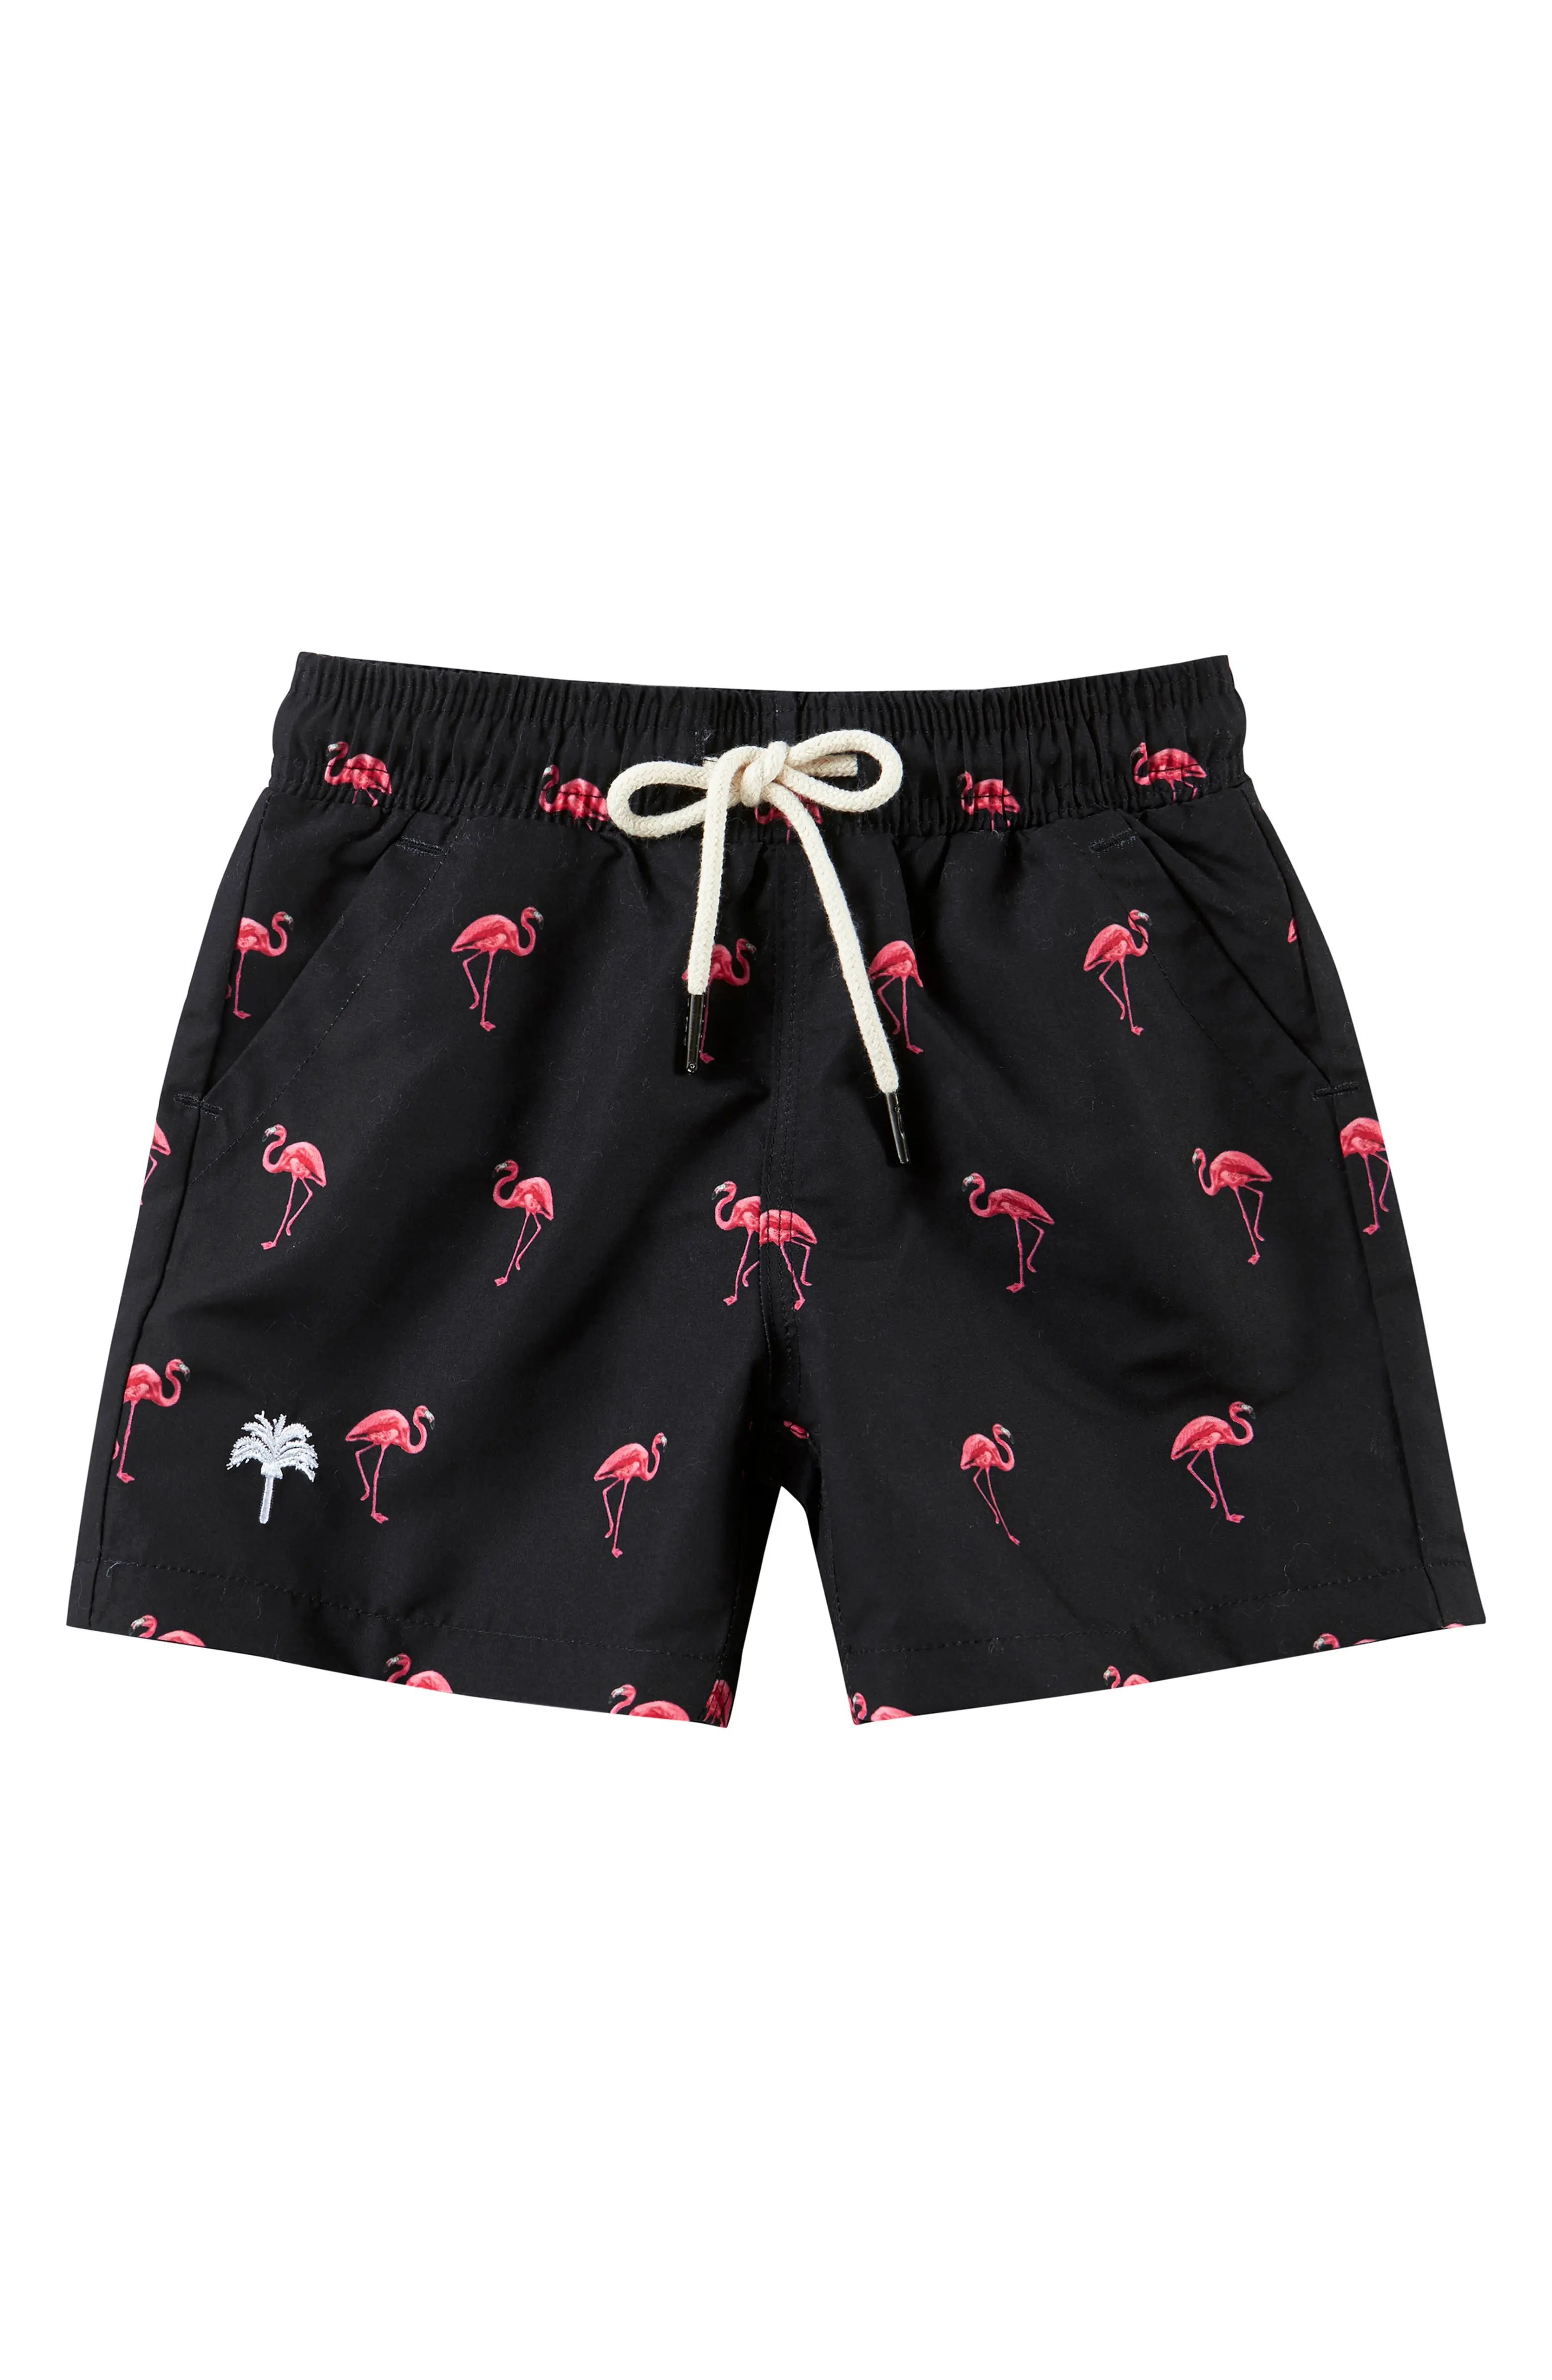 SWIM Flamingo Swim Trunks | Nordstrom